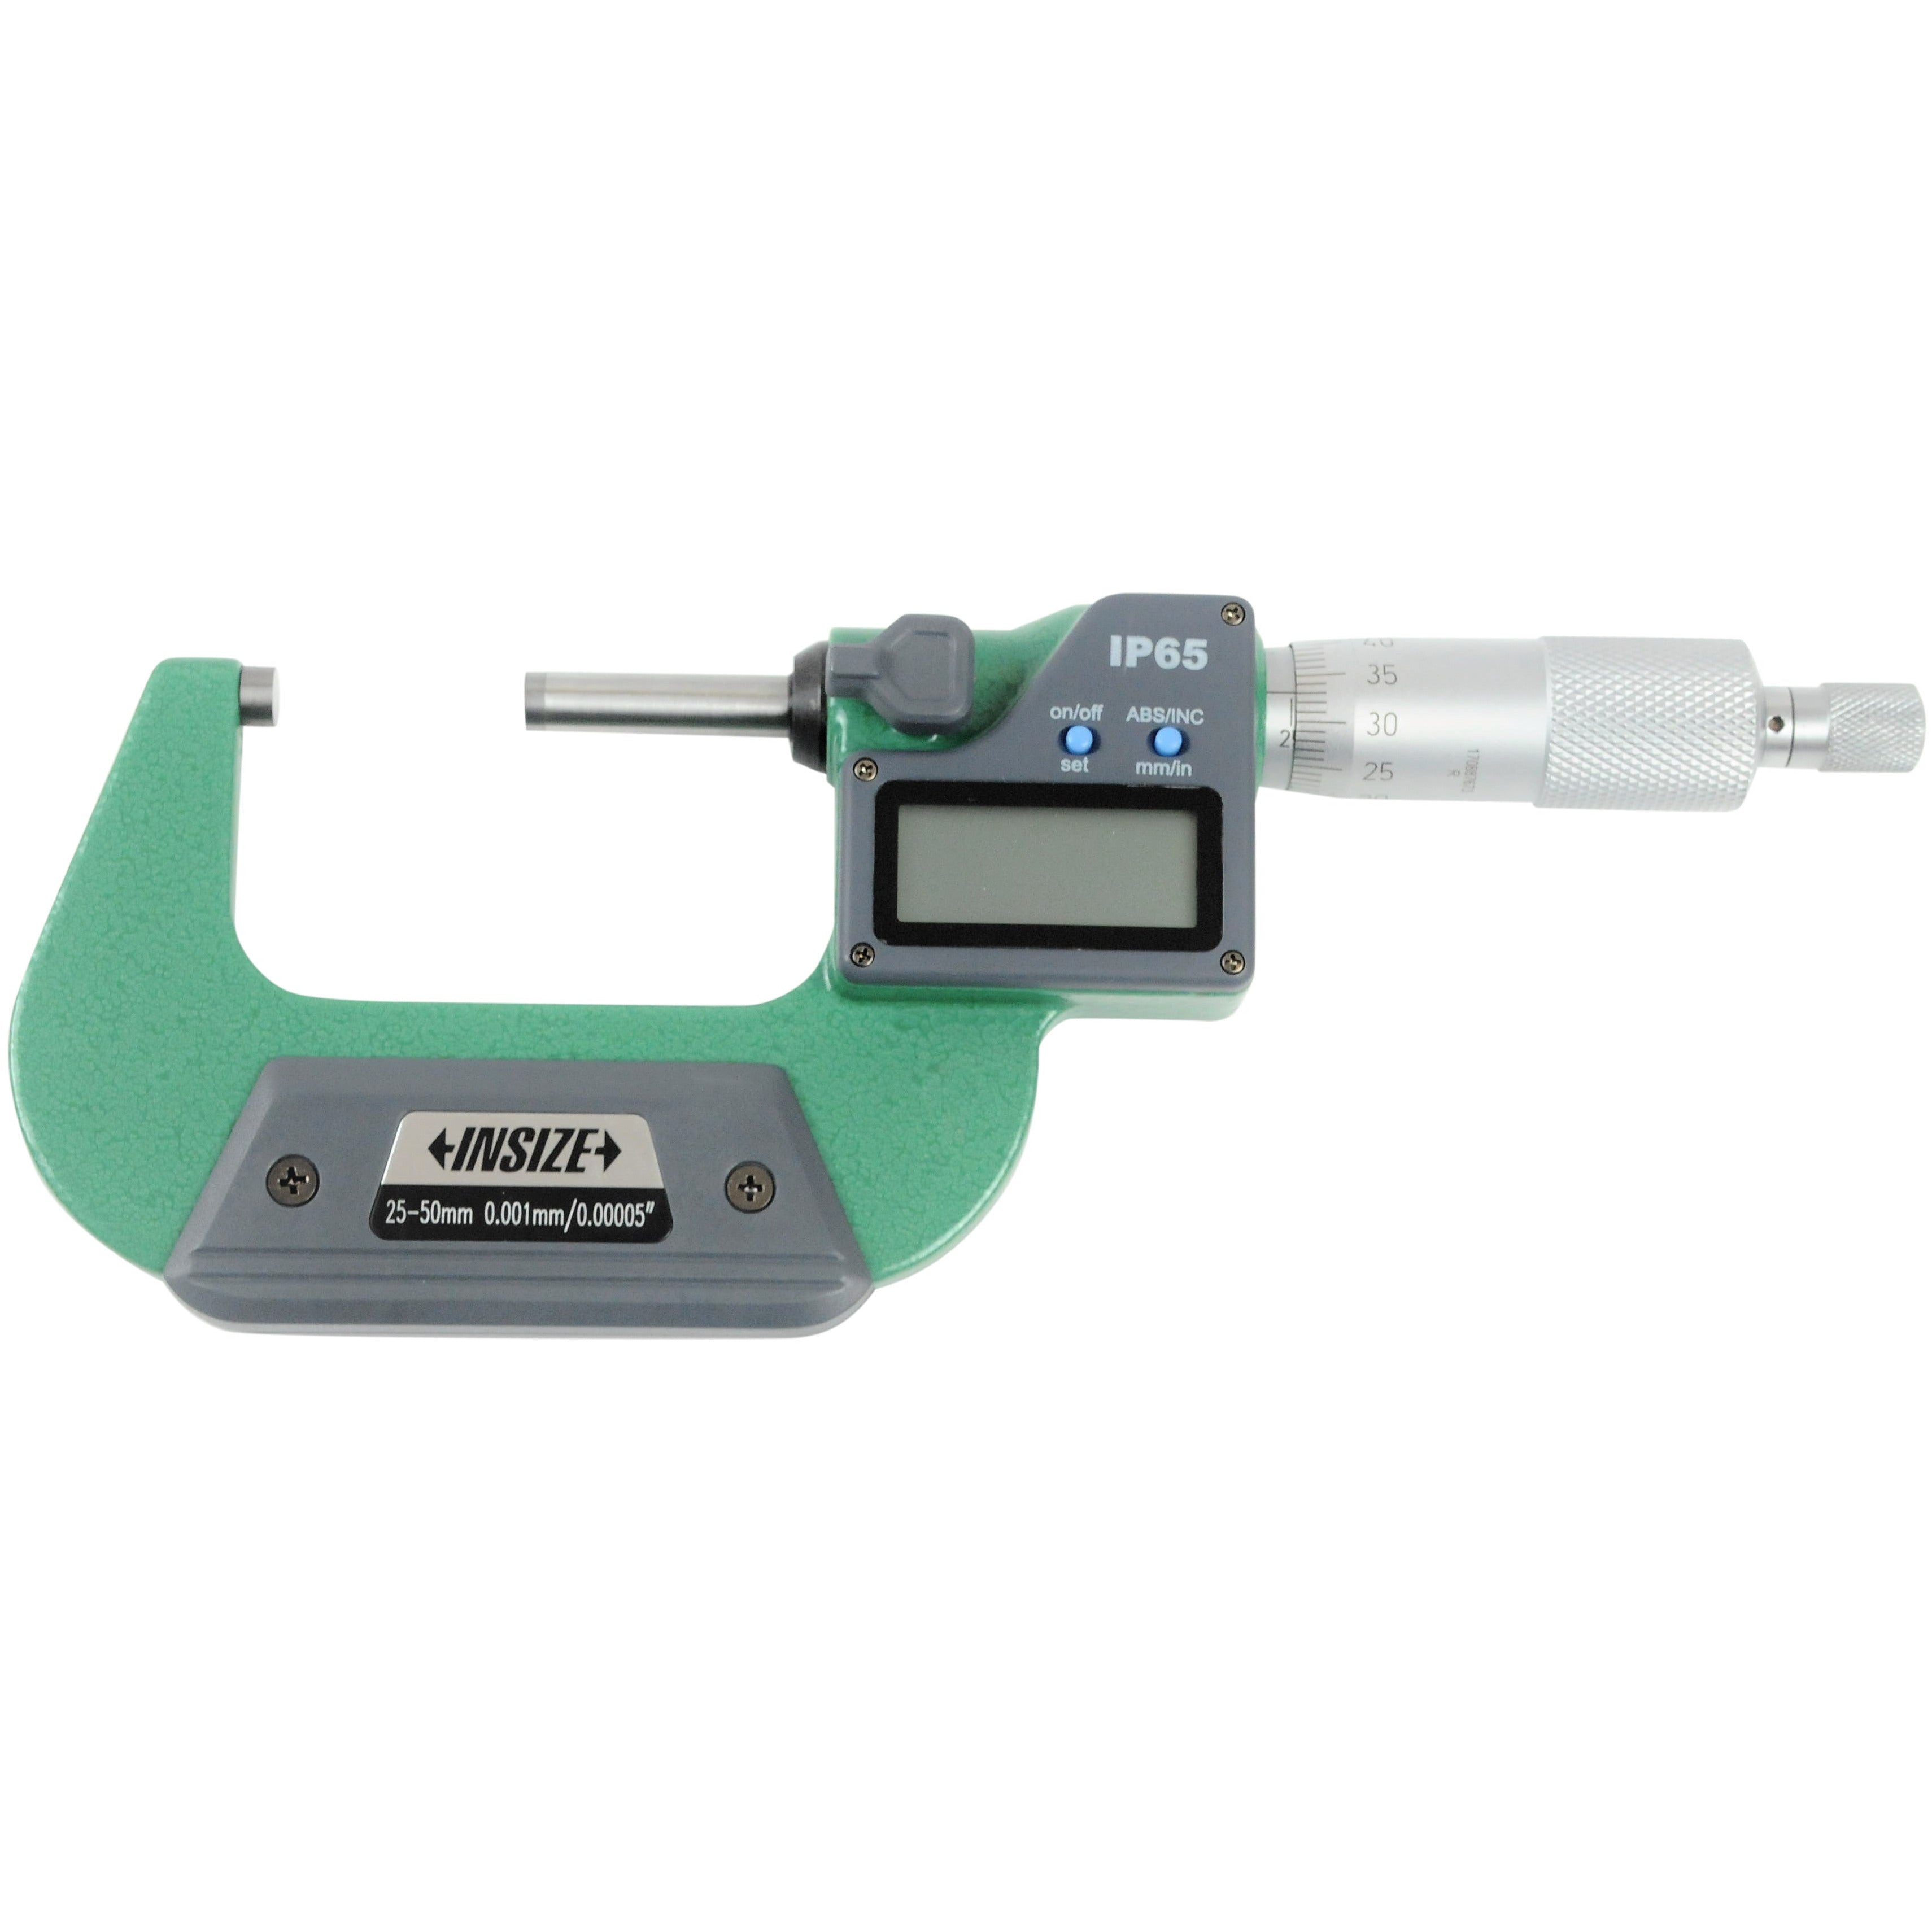 Insize IP65 Digital Outside Micrometer 25 - 50mm / 1-2" Range Series 3101-50A